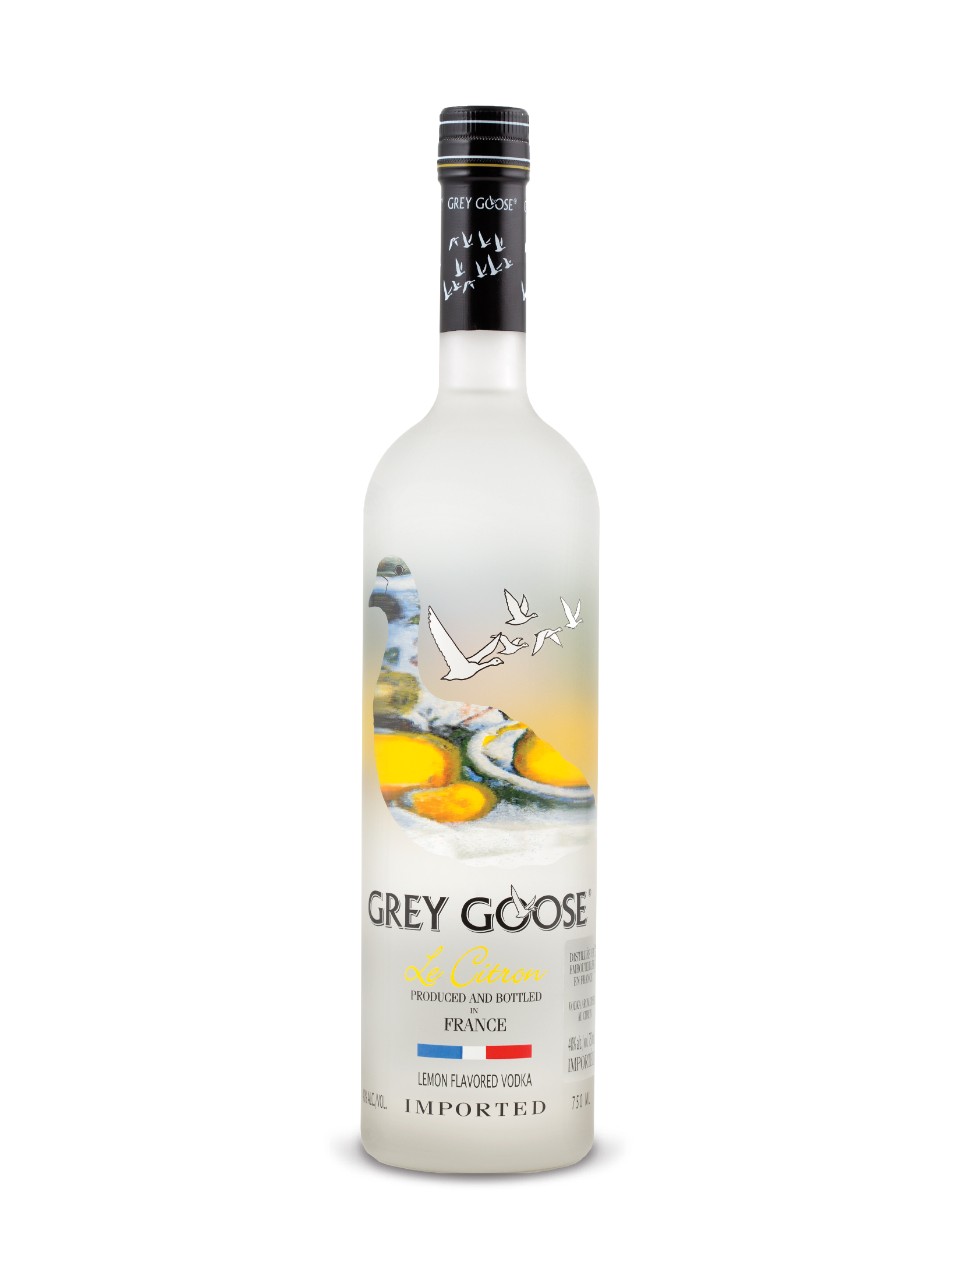 Grey Goose Lemon Vodka, France 80 proof 750ml - SEND Liquor